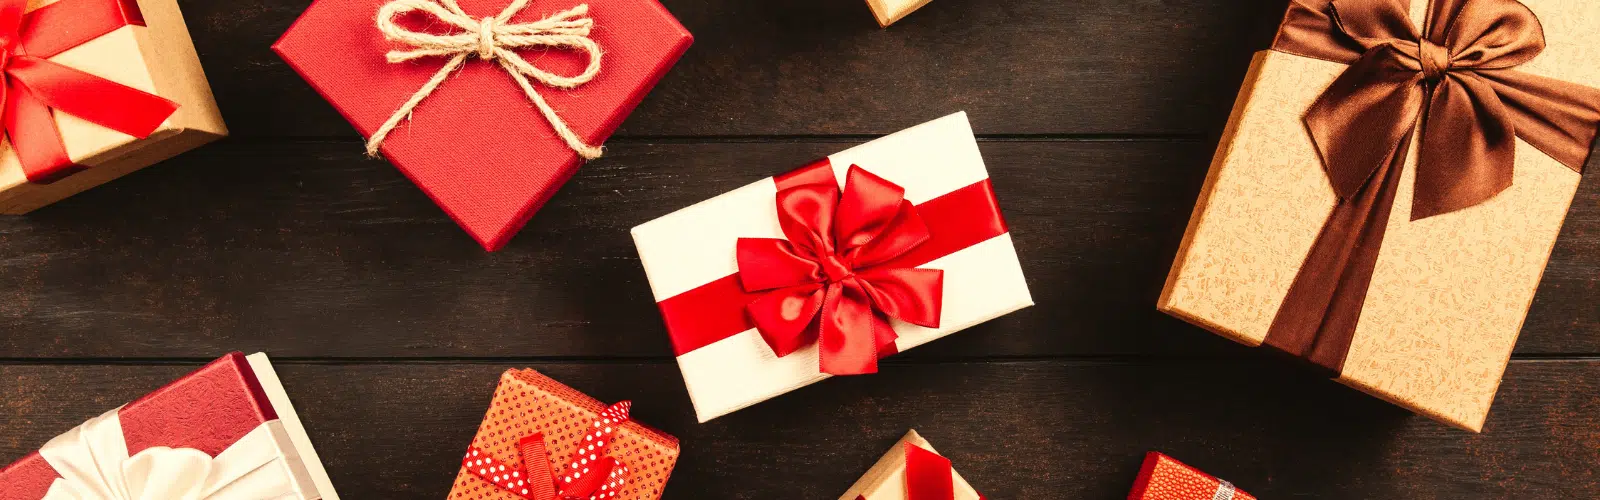 DIY: 10 Christmas gifts to make with the kids!